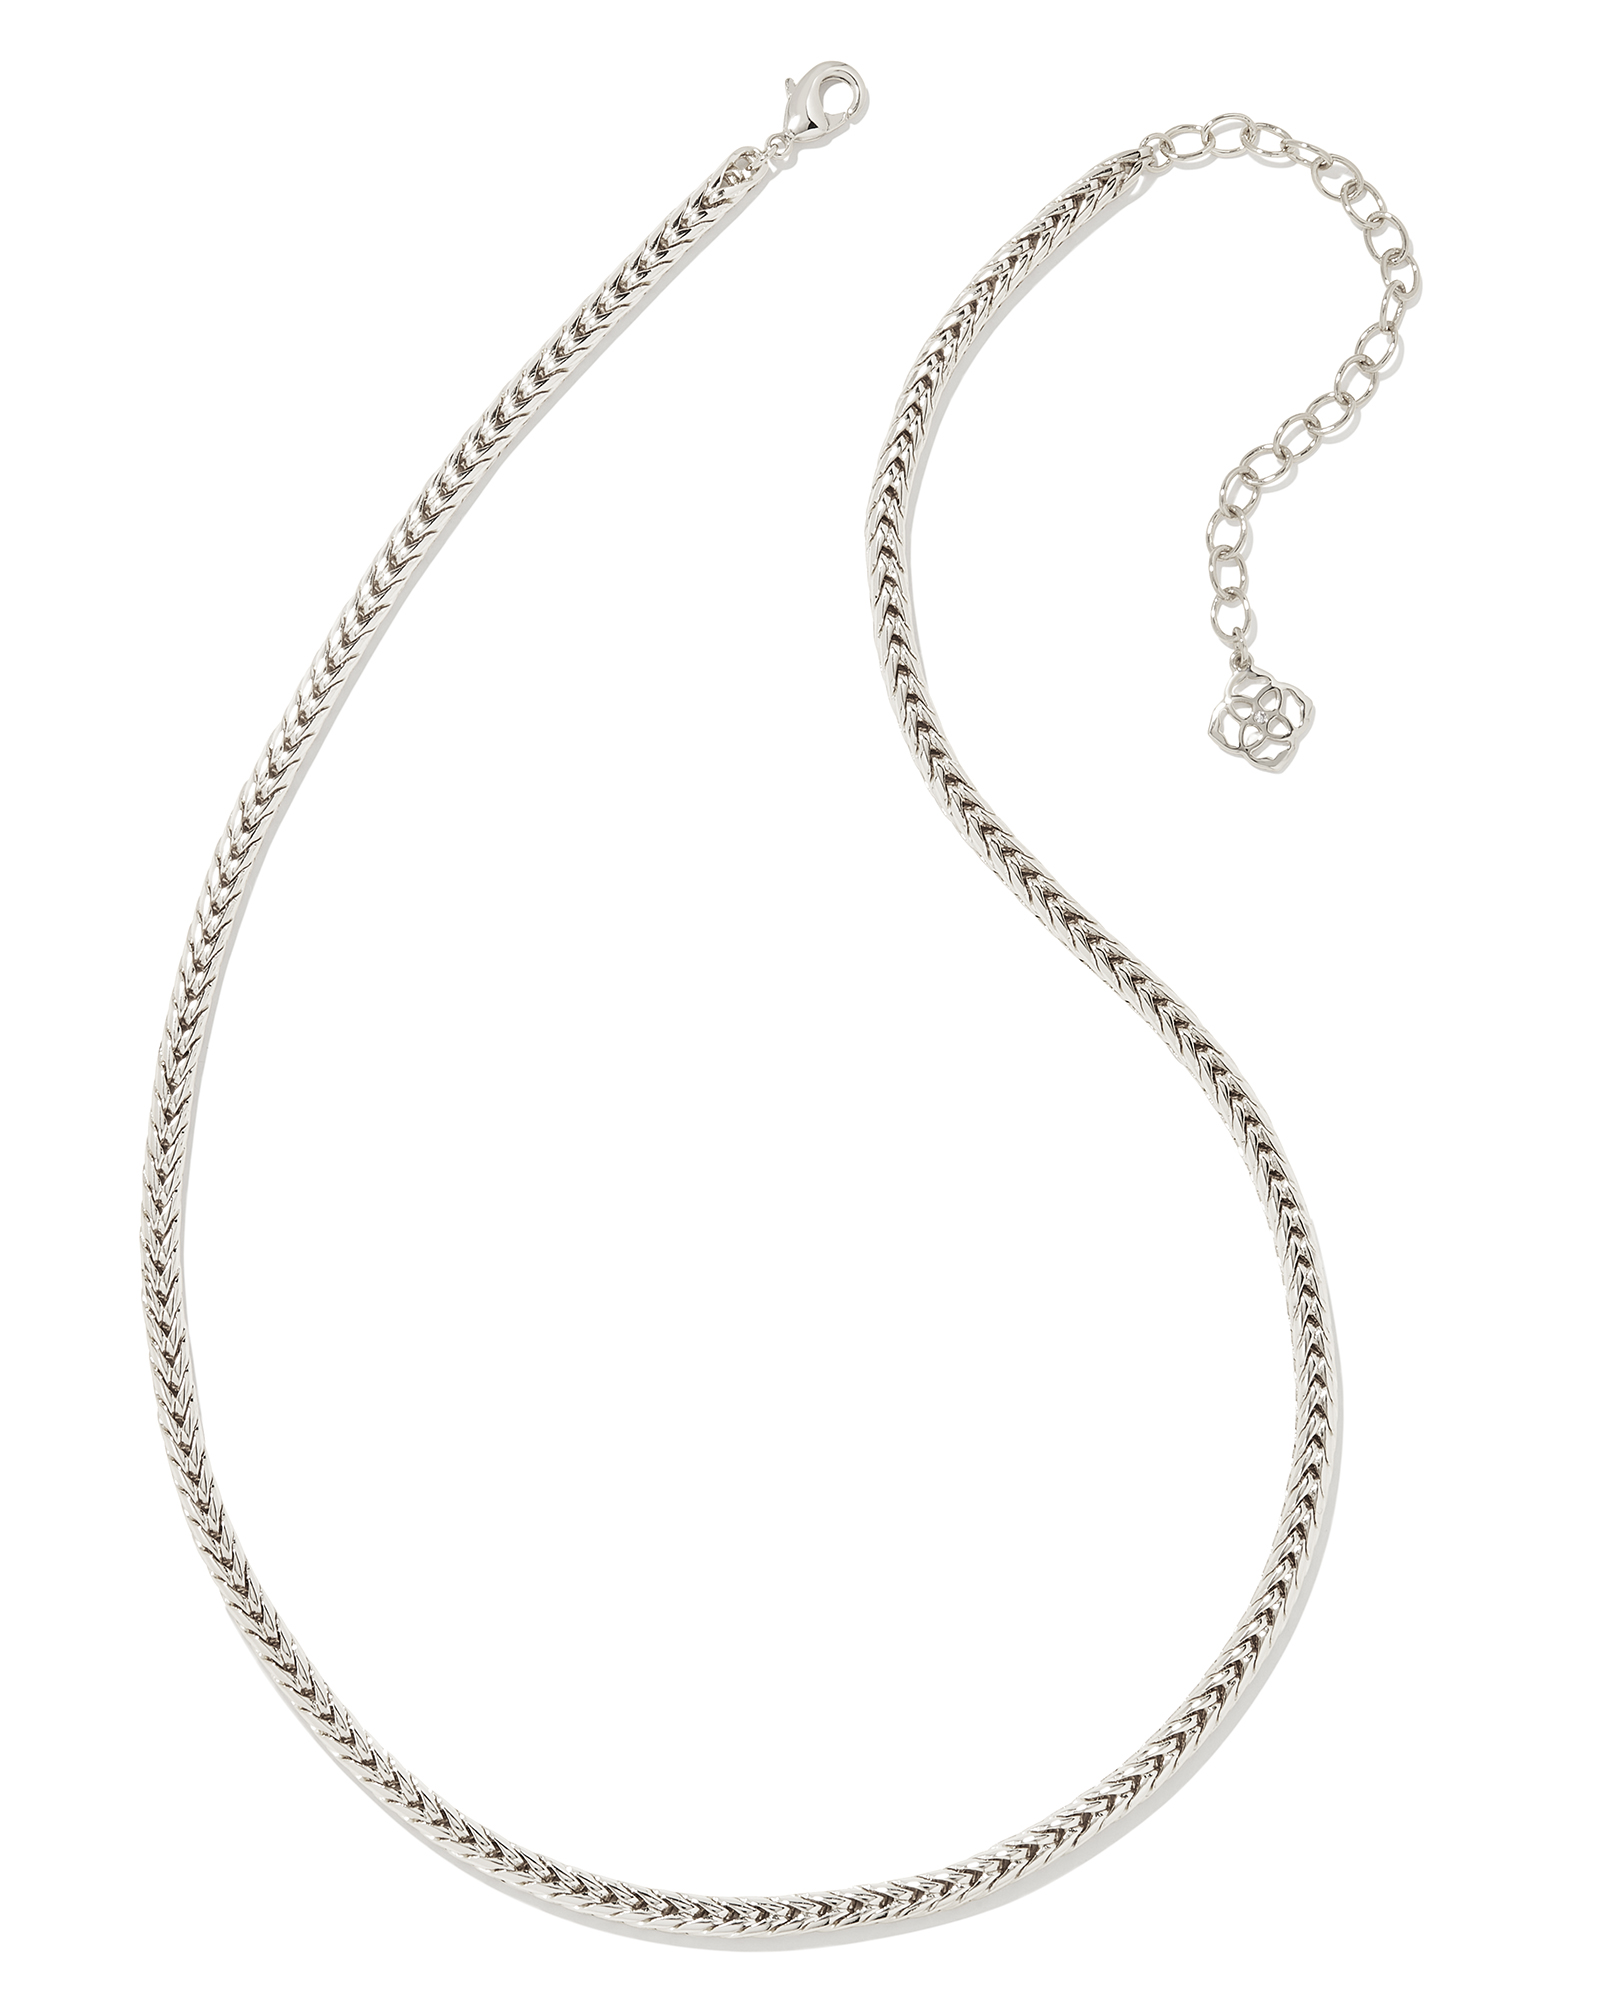 Kinsley Chain Necklace in Silver | Kendra Scott